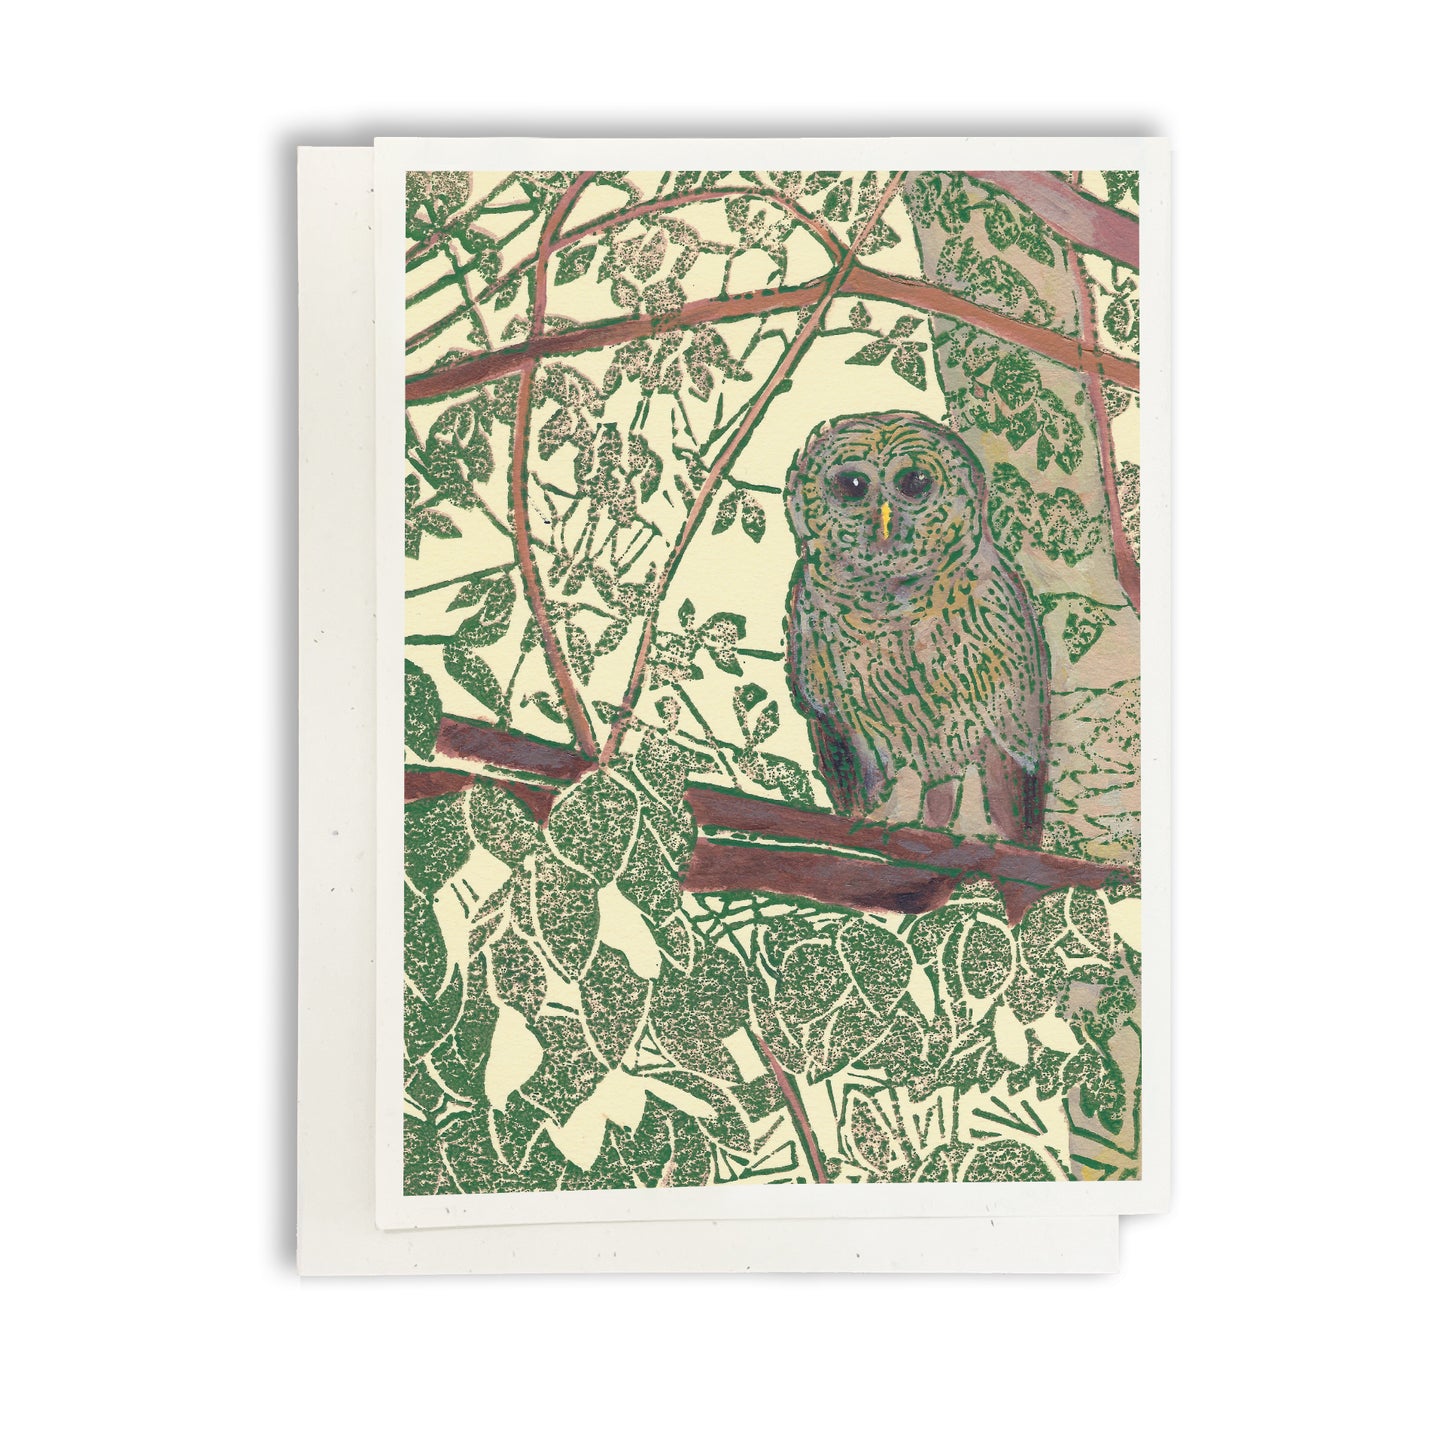 A casually elegant card featuring Michigan wildlife art by Natalia Wohletz titled Hidden Owl.